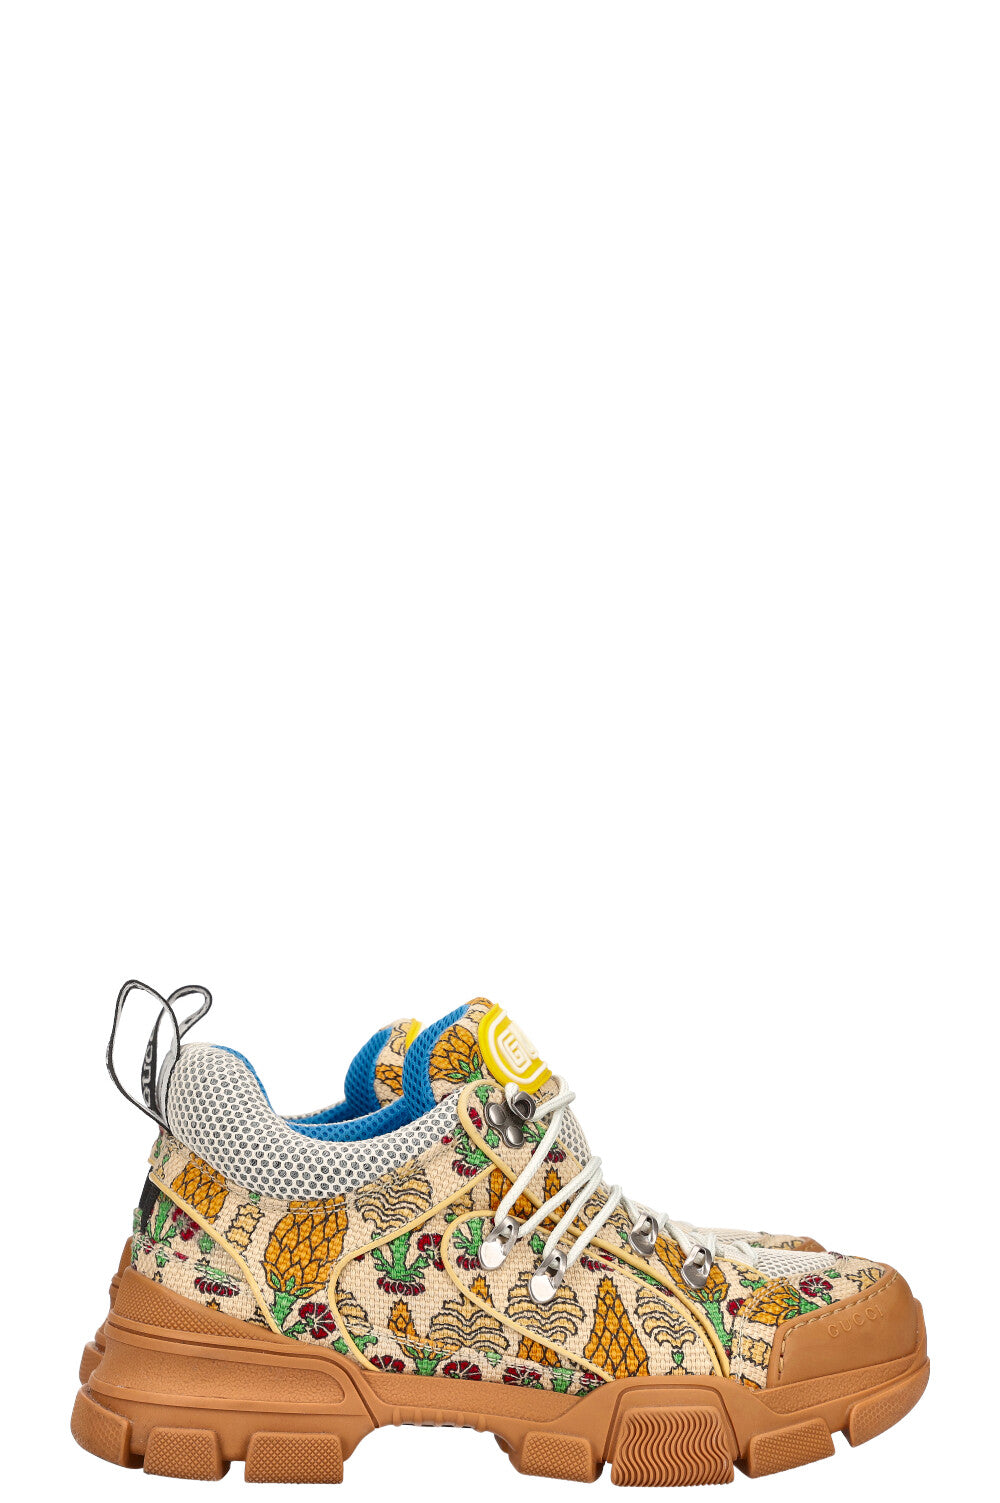 Gucci Flashtrek Sneakers Canvas